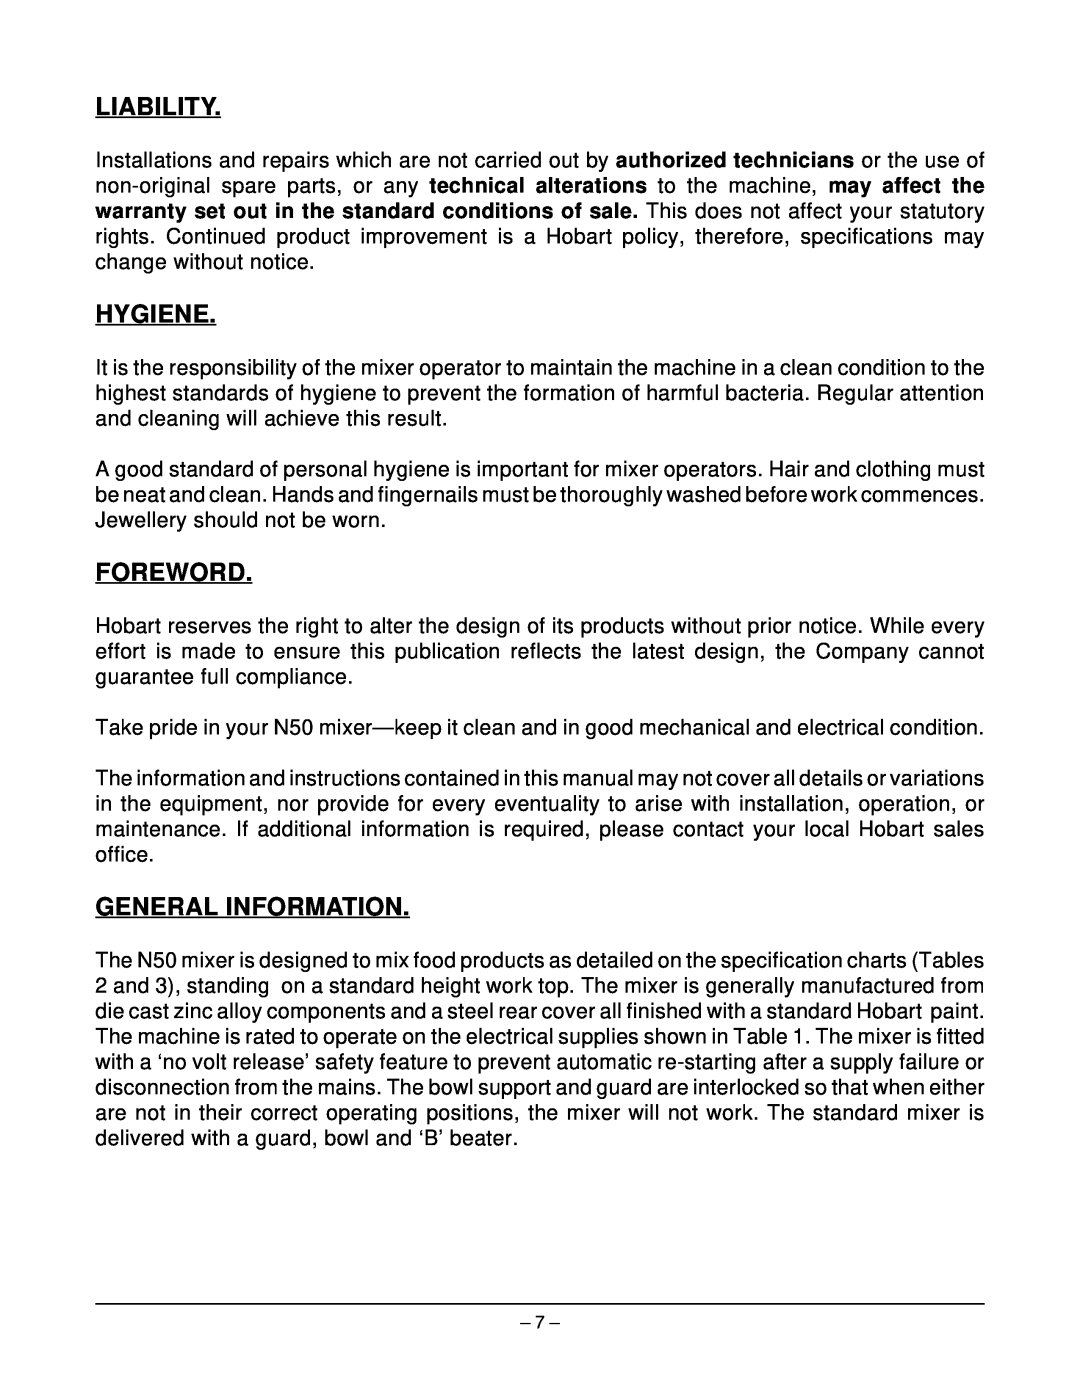 Hobart N50 MIXER manual Liability, Hygiene, Foreword, General Information 